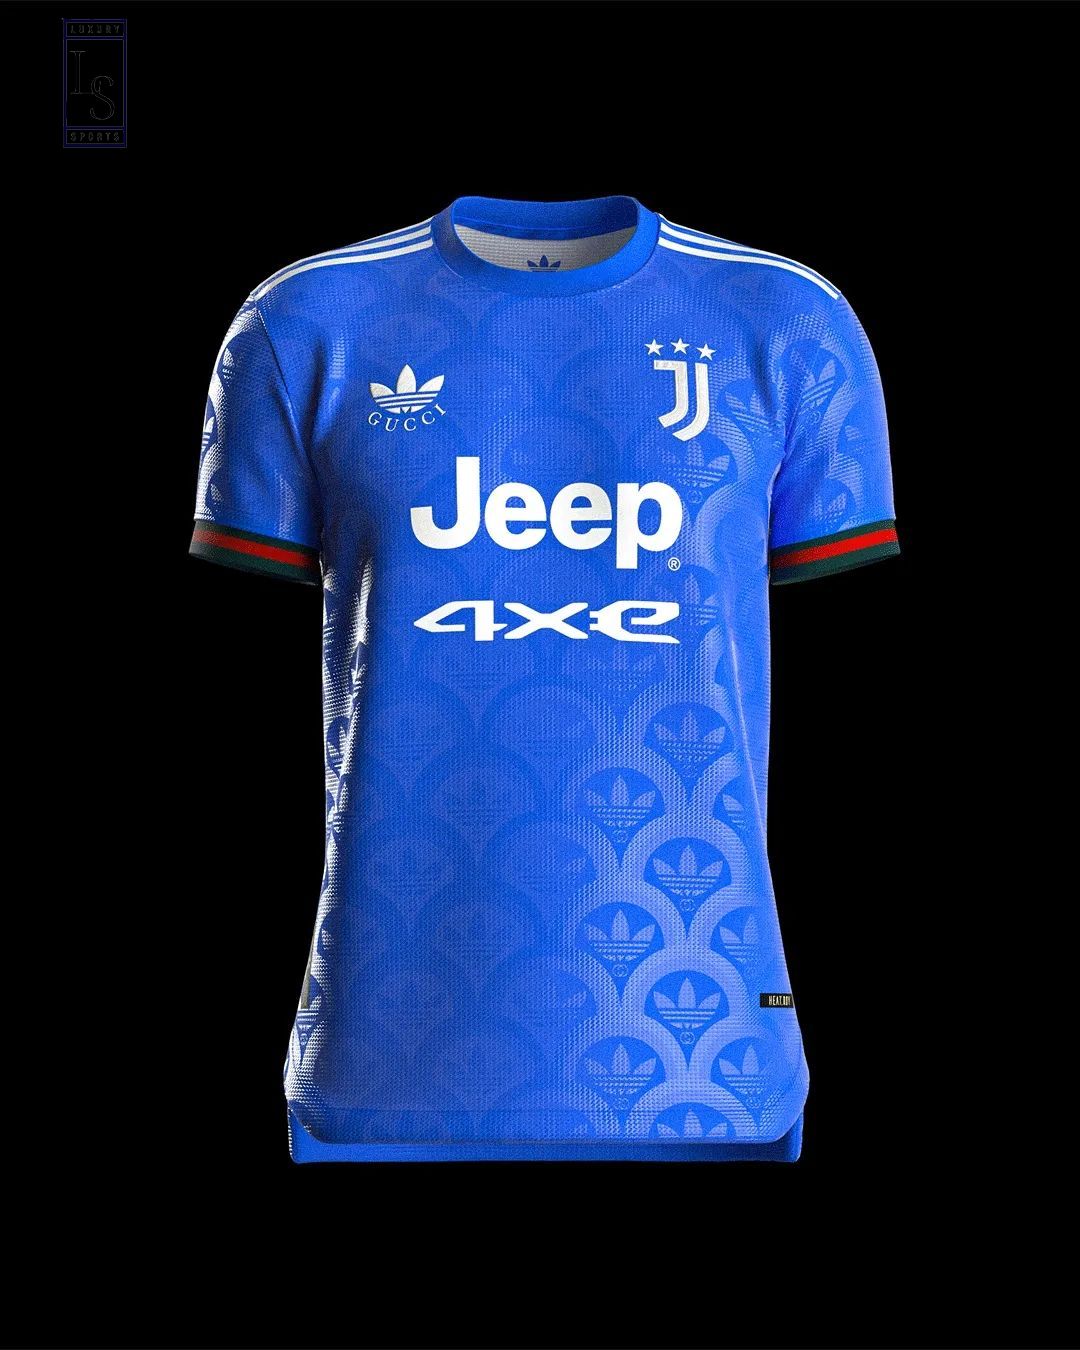 Gucci Juventus Blue Jersey Soccer Shirt and Short